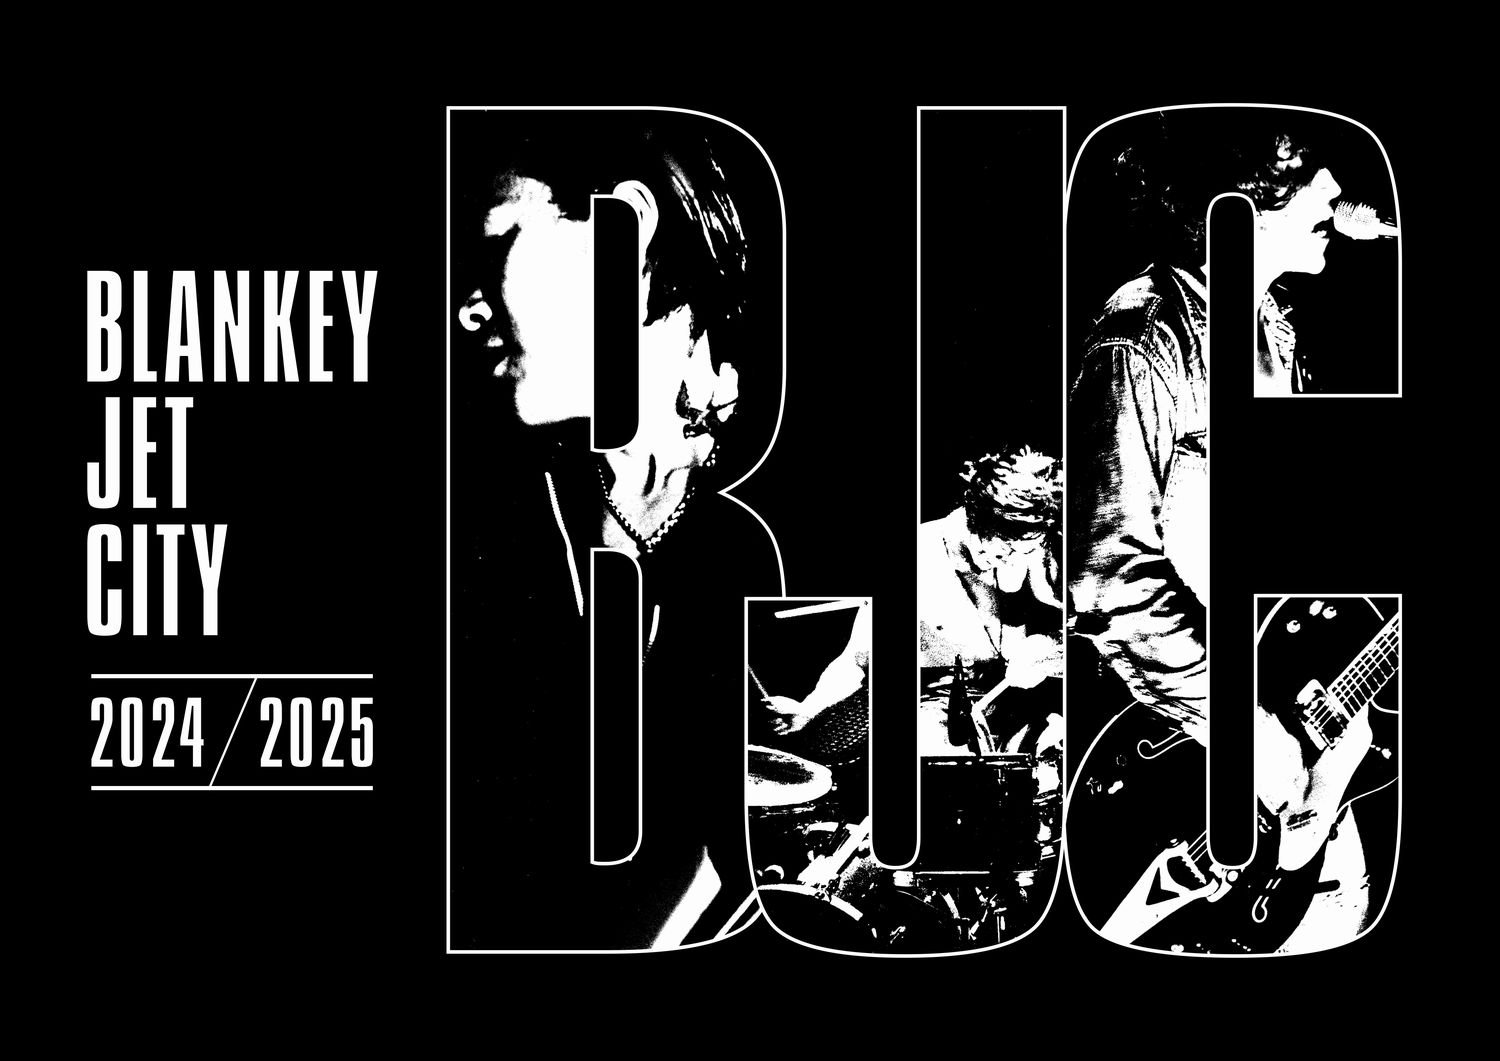 BLANKEY JET CITY 7/28(日)全曲サブスク解禁 9/25(水)より初アナログ化含む全オリジナル・ALアナログ盤発売 |  USENの音楽情報サイト「encore（アンコール）」